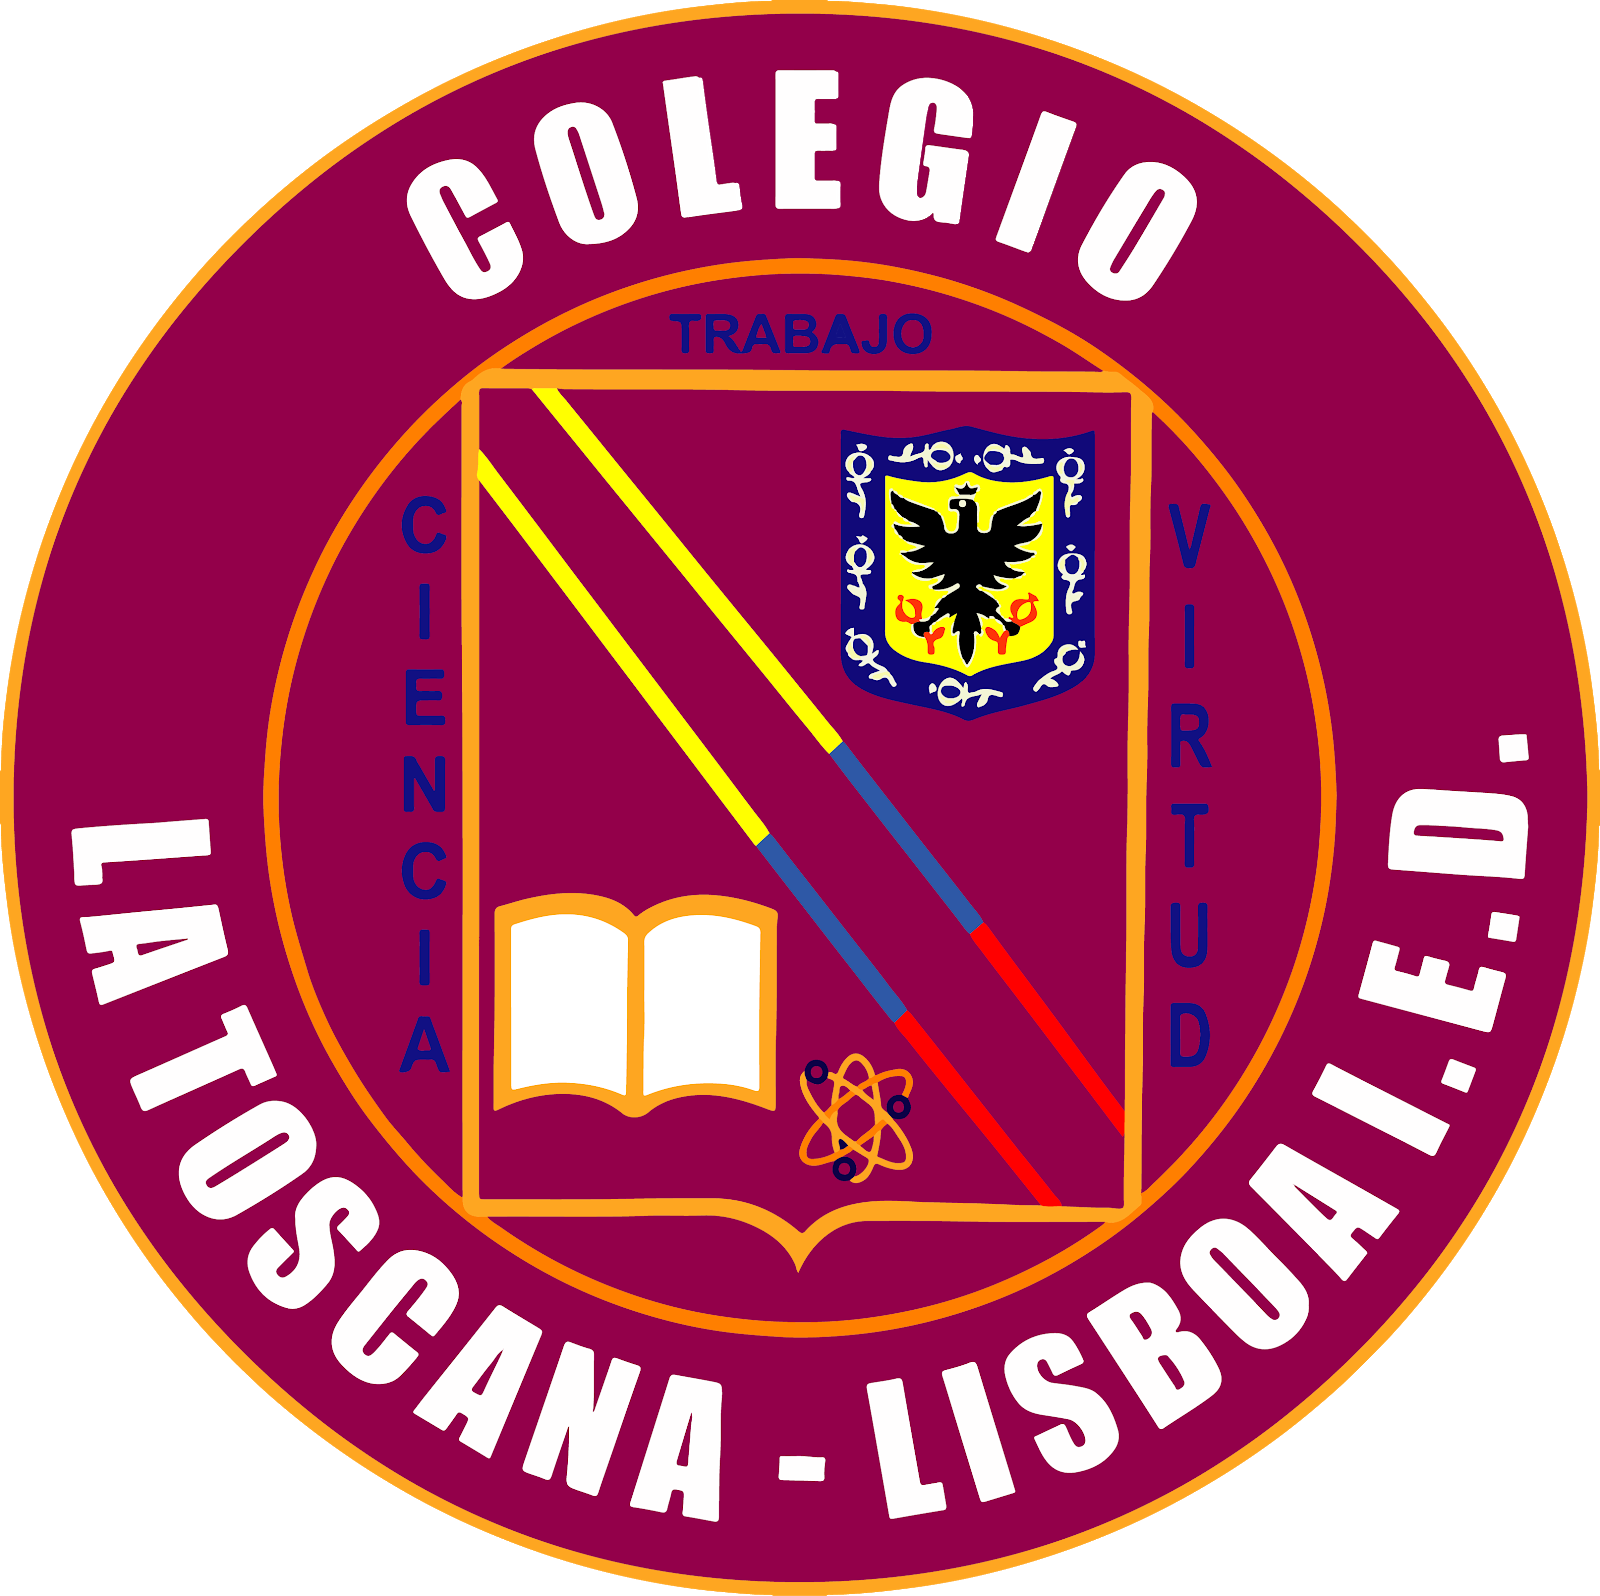 Colegio La Toscana Lisboa